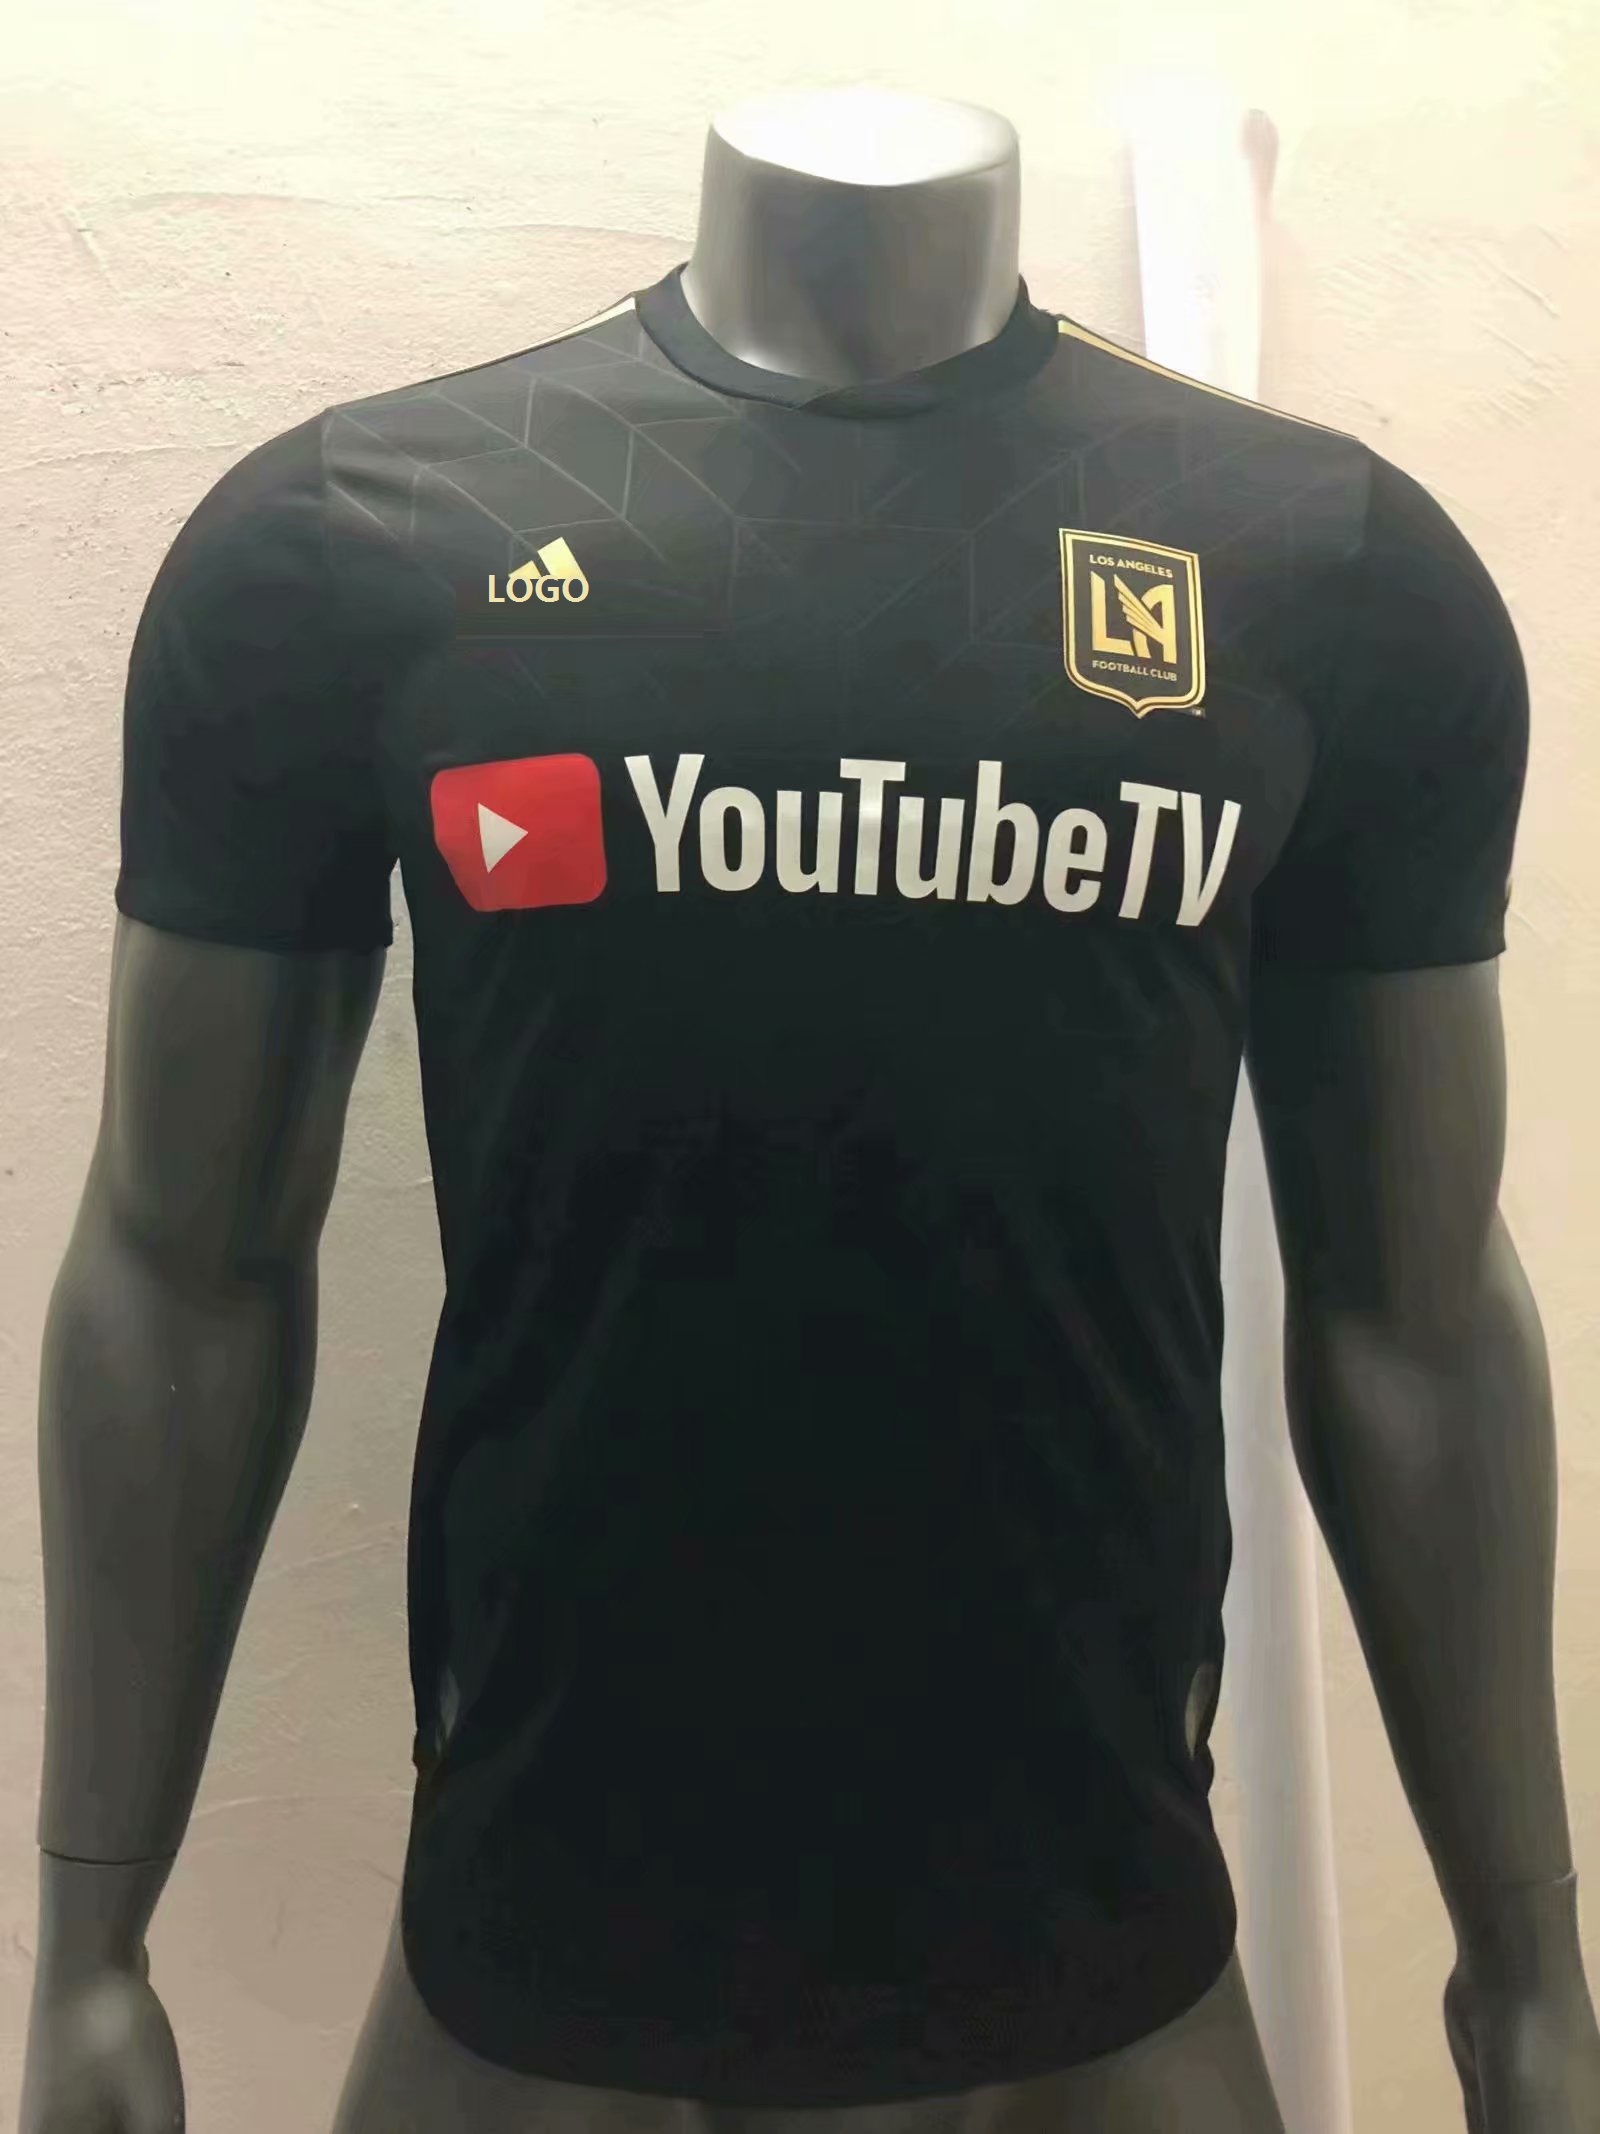 youtube soccer jersey